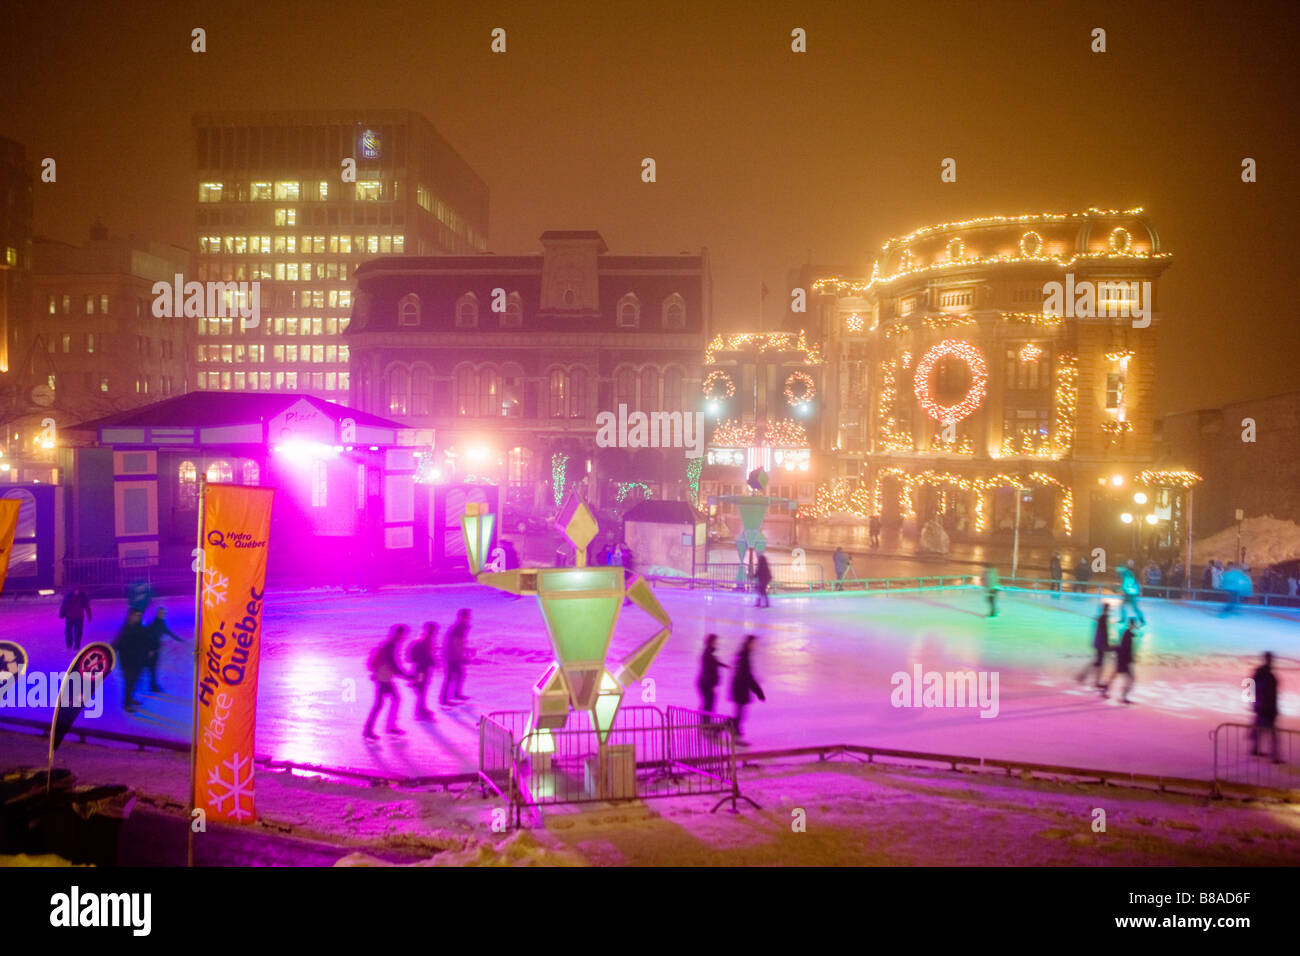 Menschen Eislaufen am Place Hydro Quebec Frontmann Capitole de Cabaret Winter Karneval Quebec City, Kanada Stockfoto